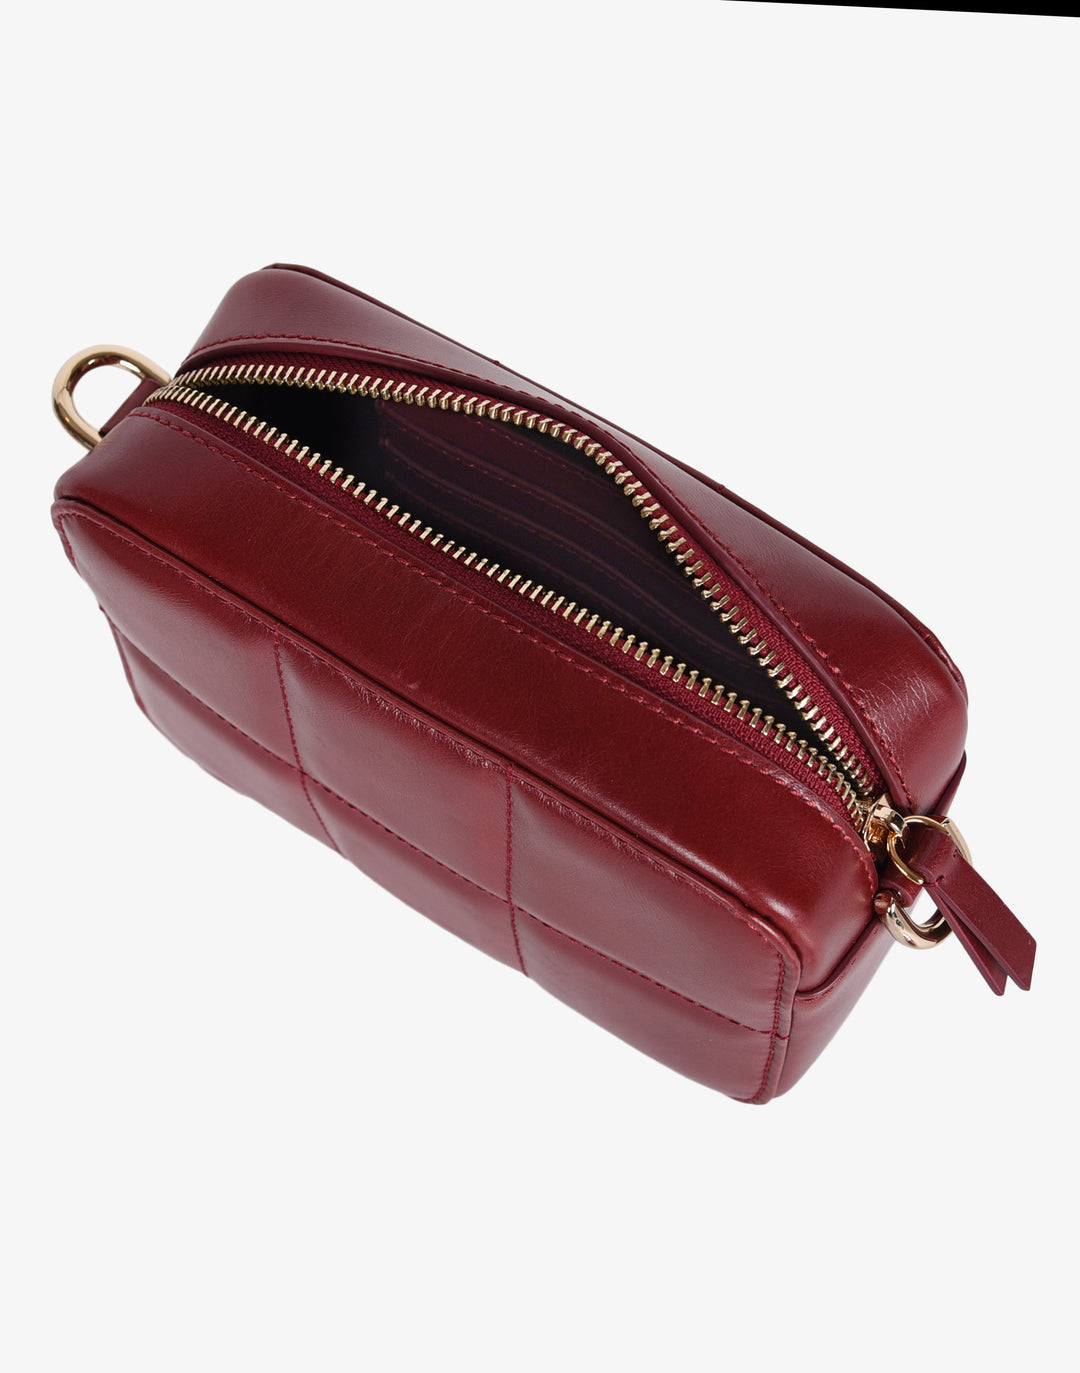 Camera Box” #ladyhandbag #Luxurybag #luxurygoods #handbag